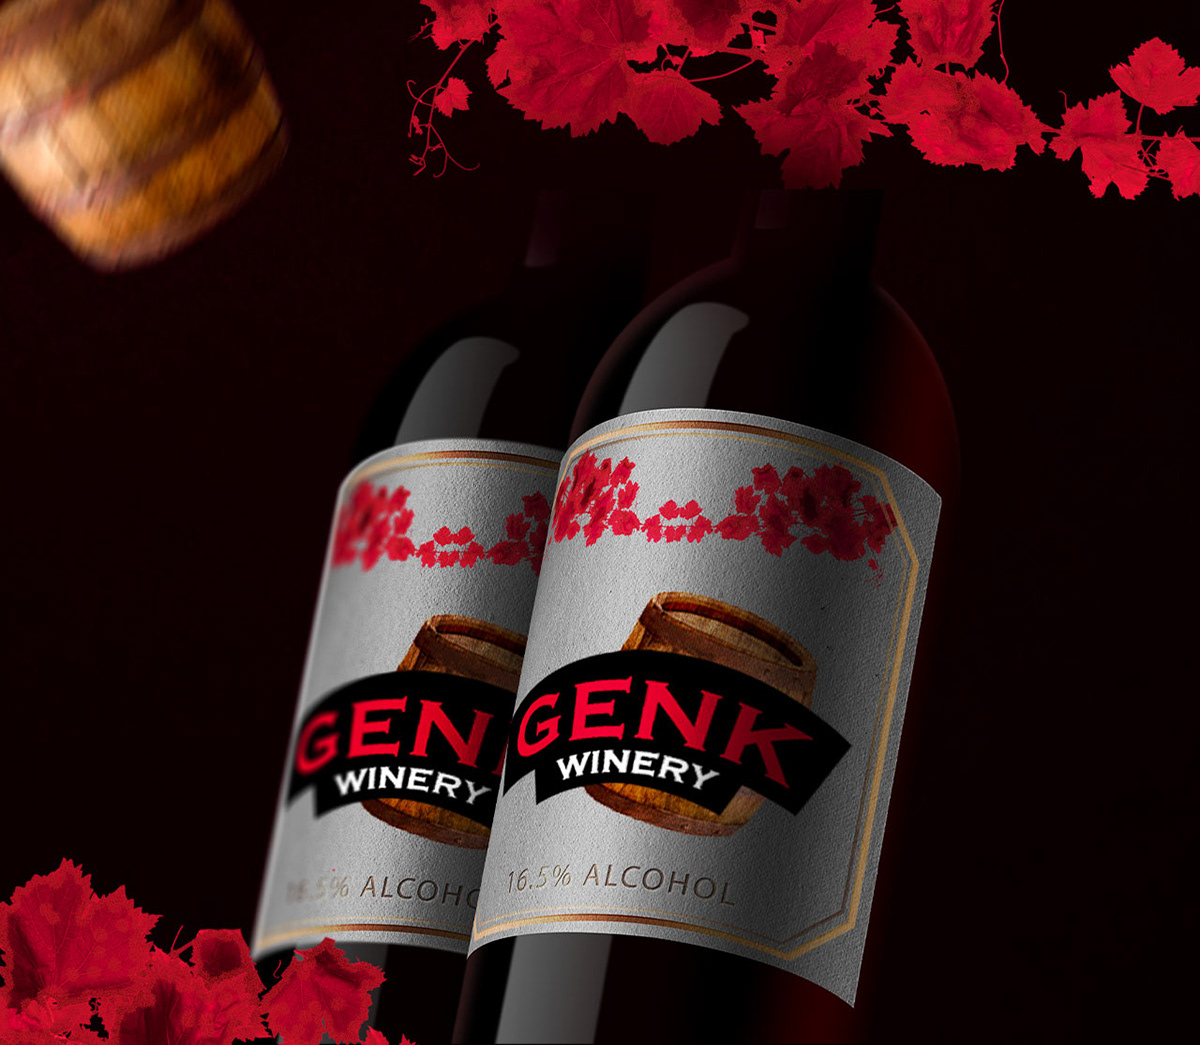 beer bottle GENK WINERY logo Packaging product design  winery